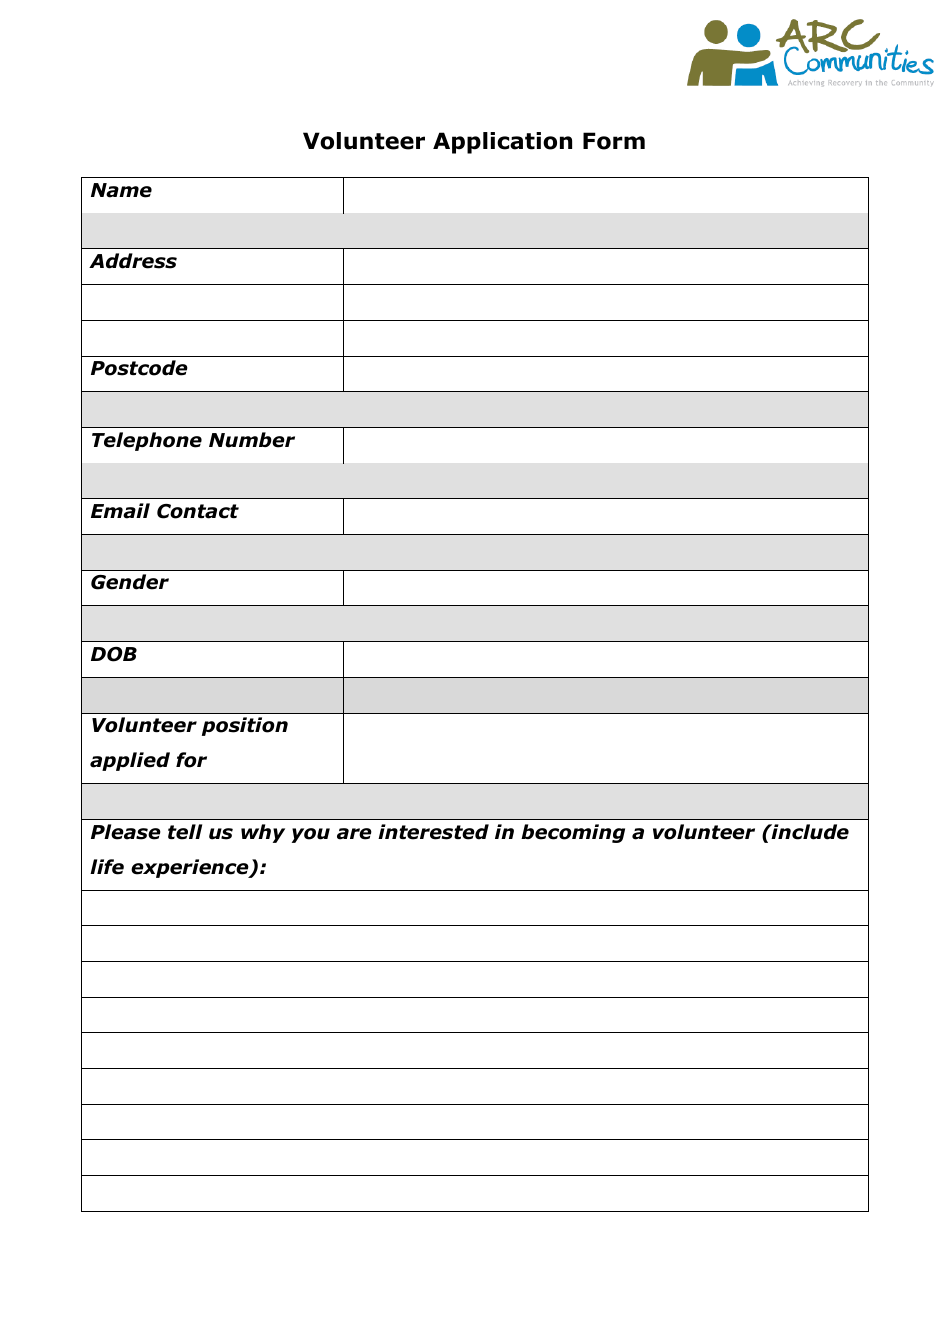 Volunteer Application Form - ARC Communities, Page 1